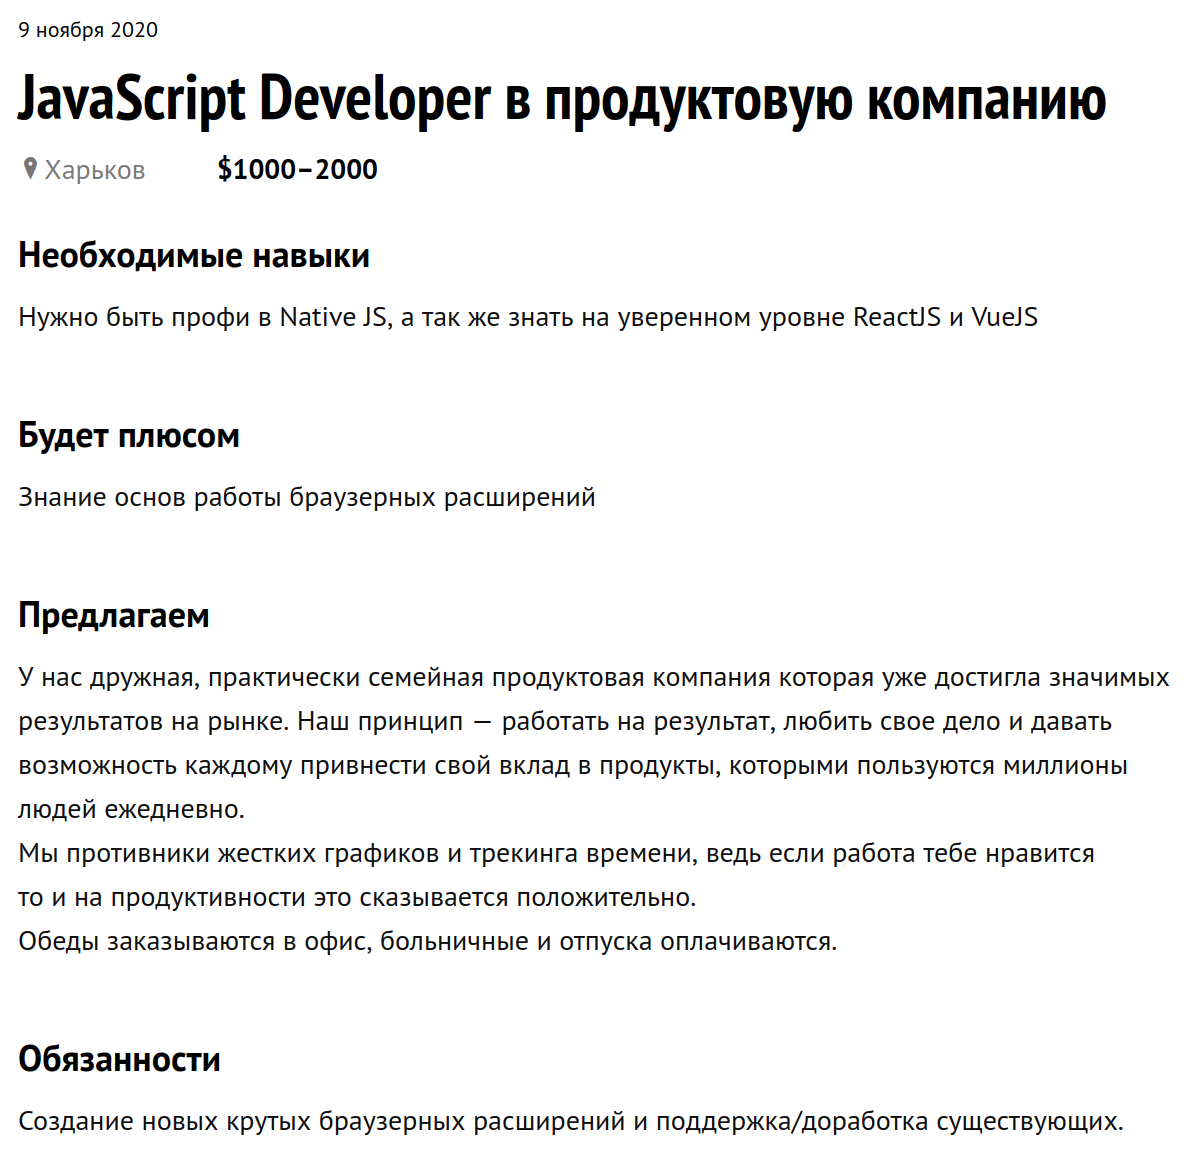 Screenshot of a Russian-language vacancy for a JavaScript Developer